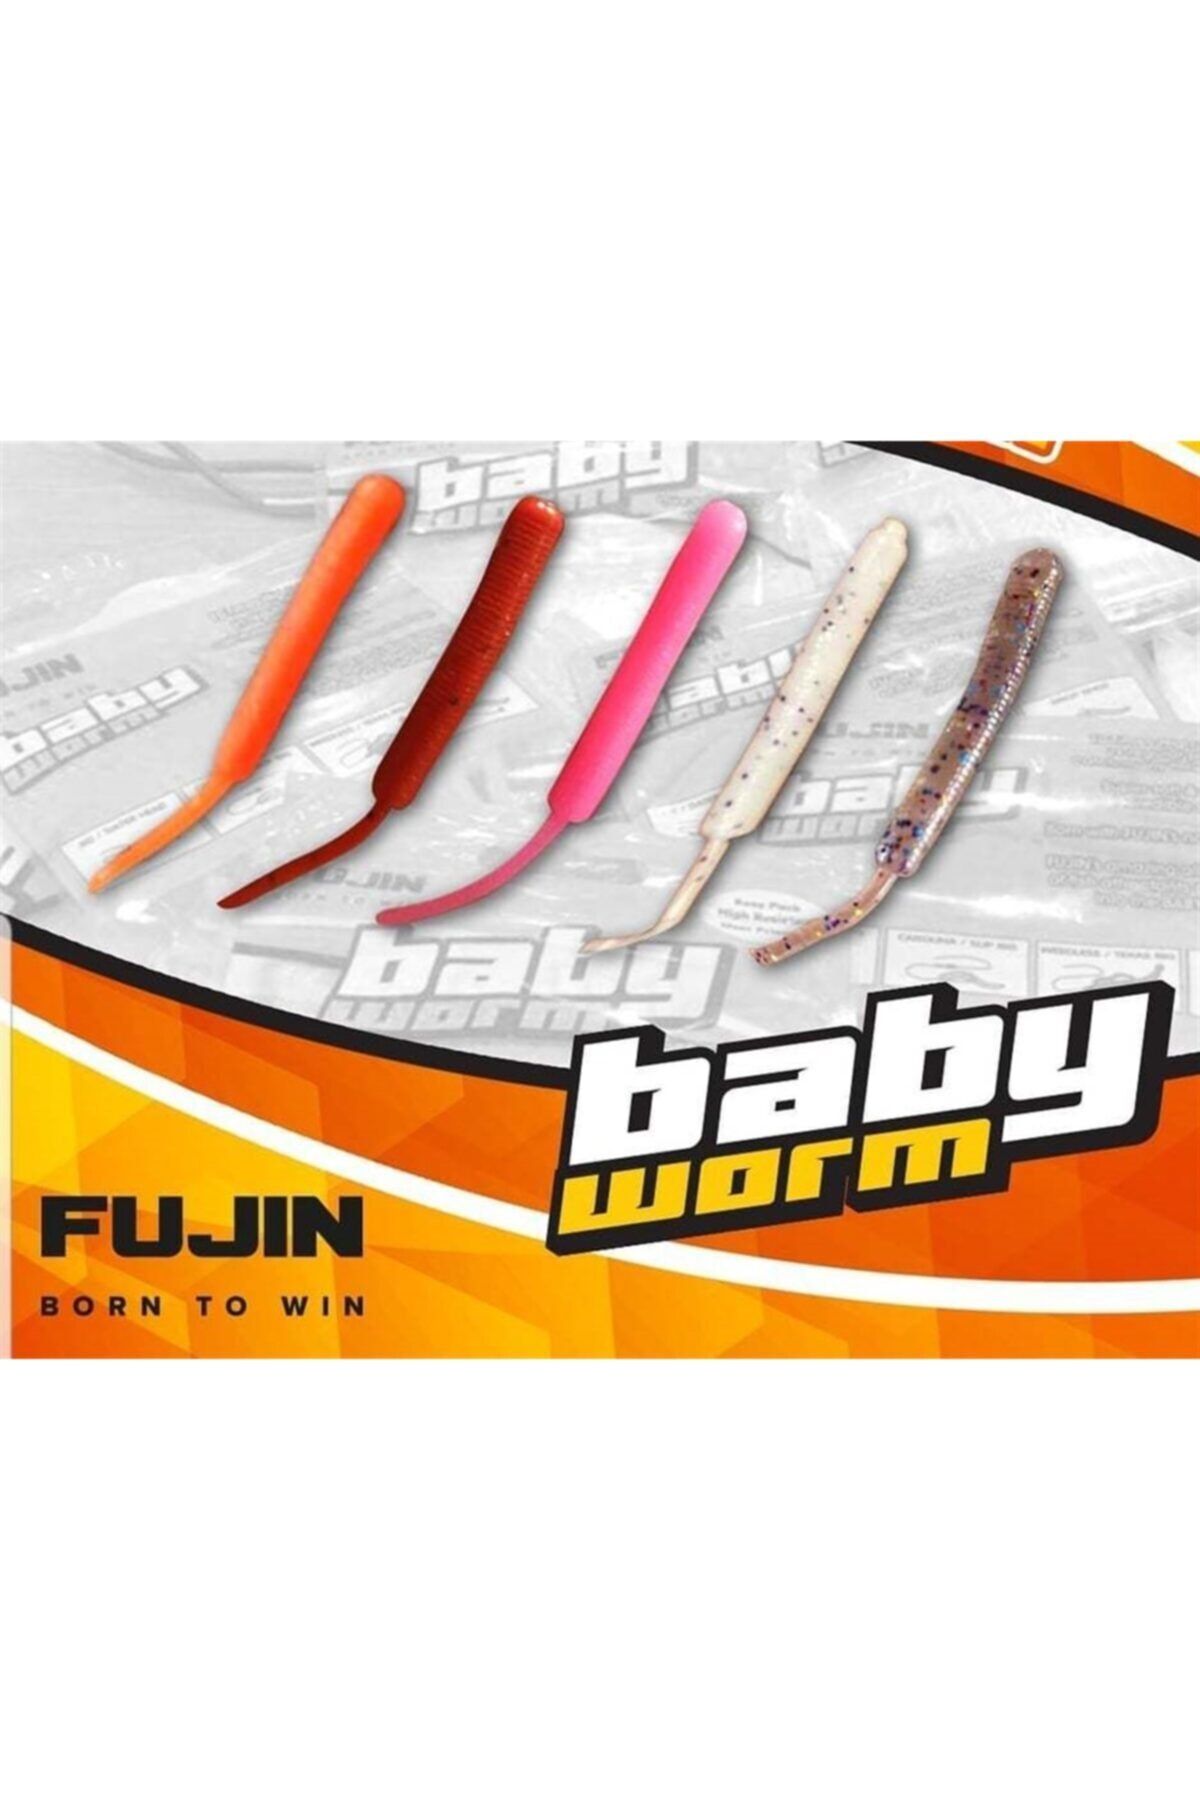 Fujin Baby Worm 5.2 Cm Floating Lrf Silikonu